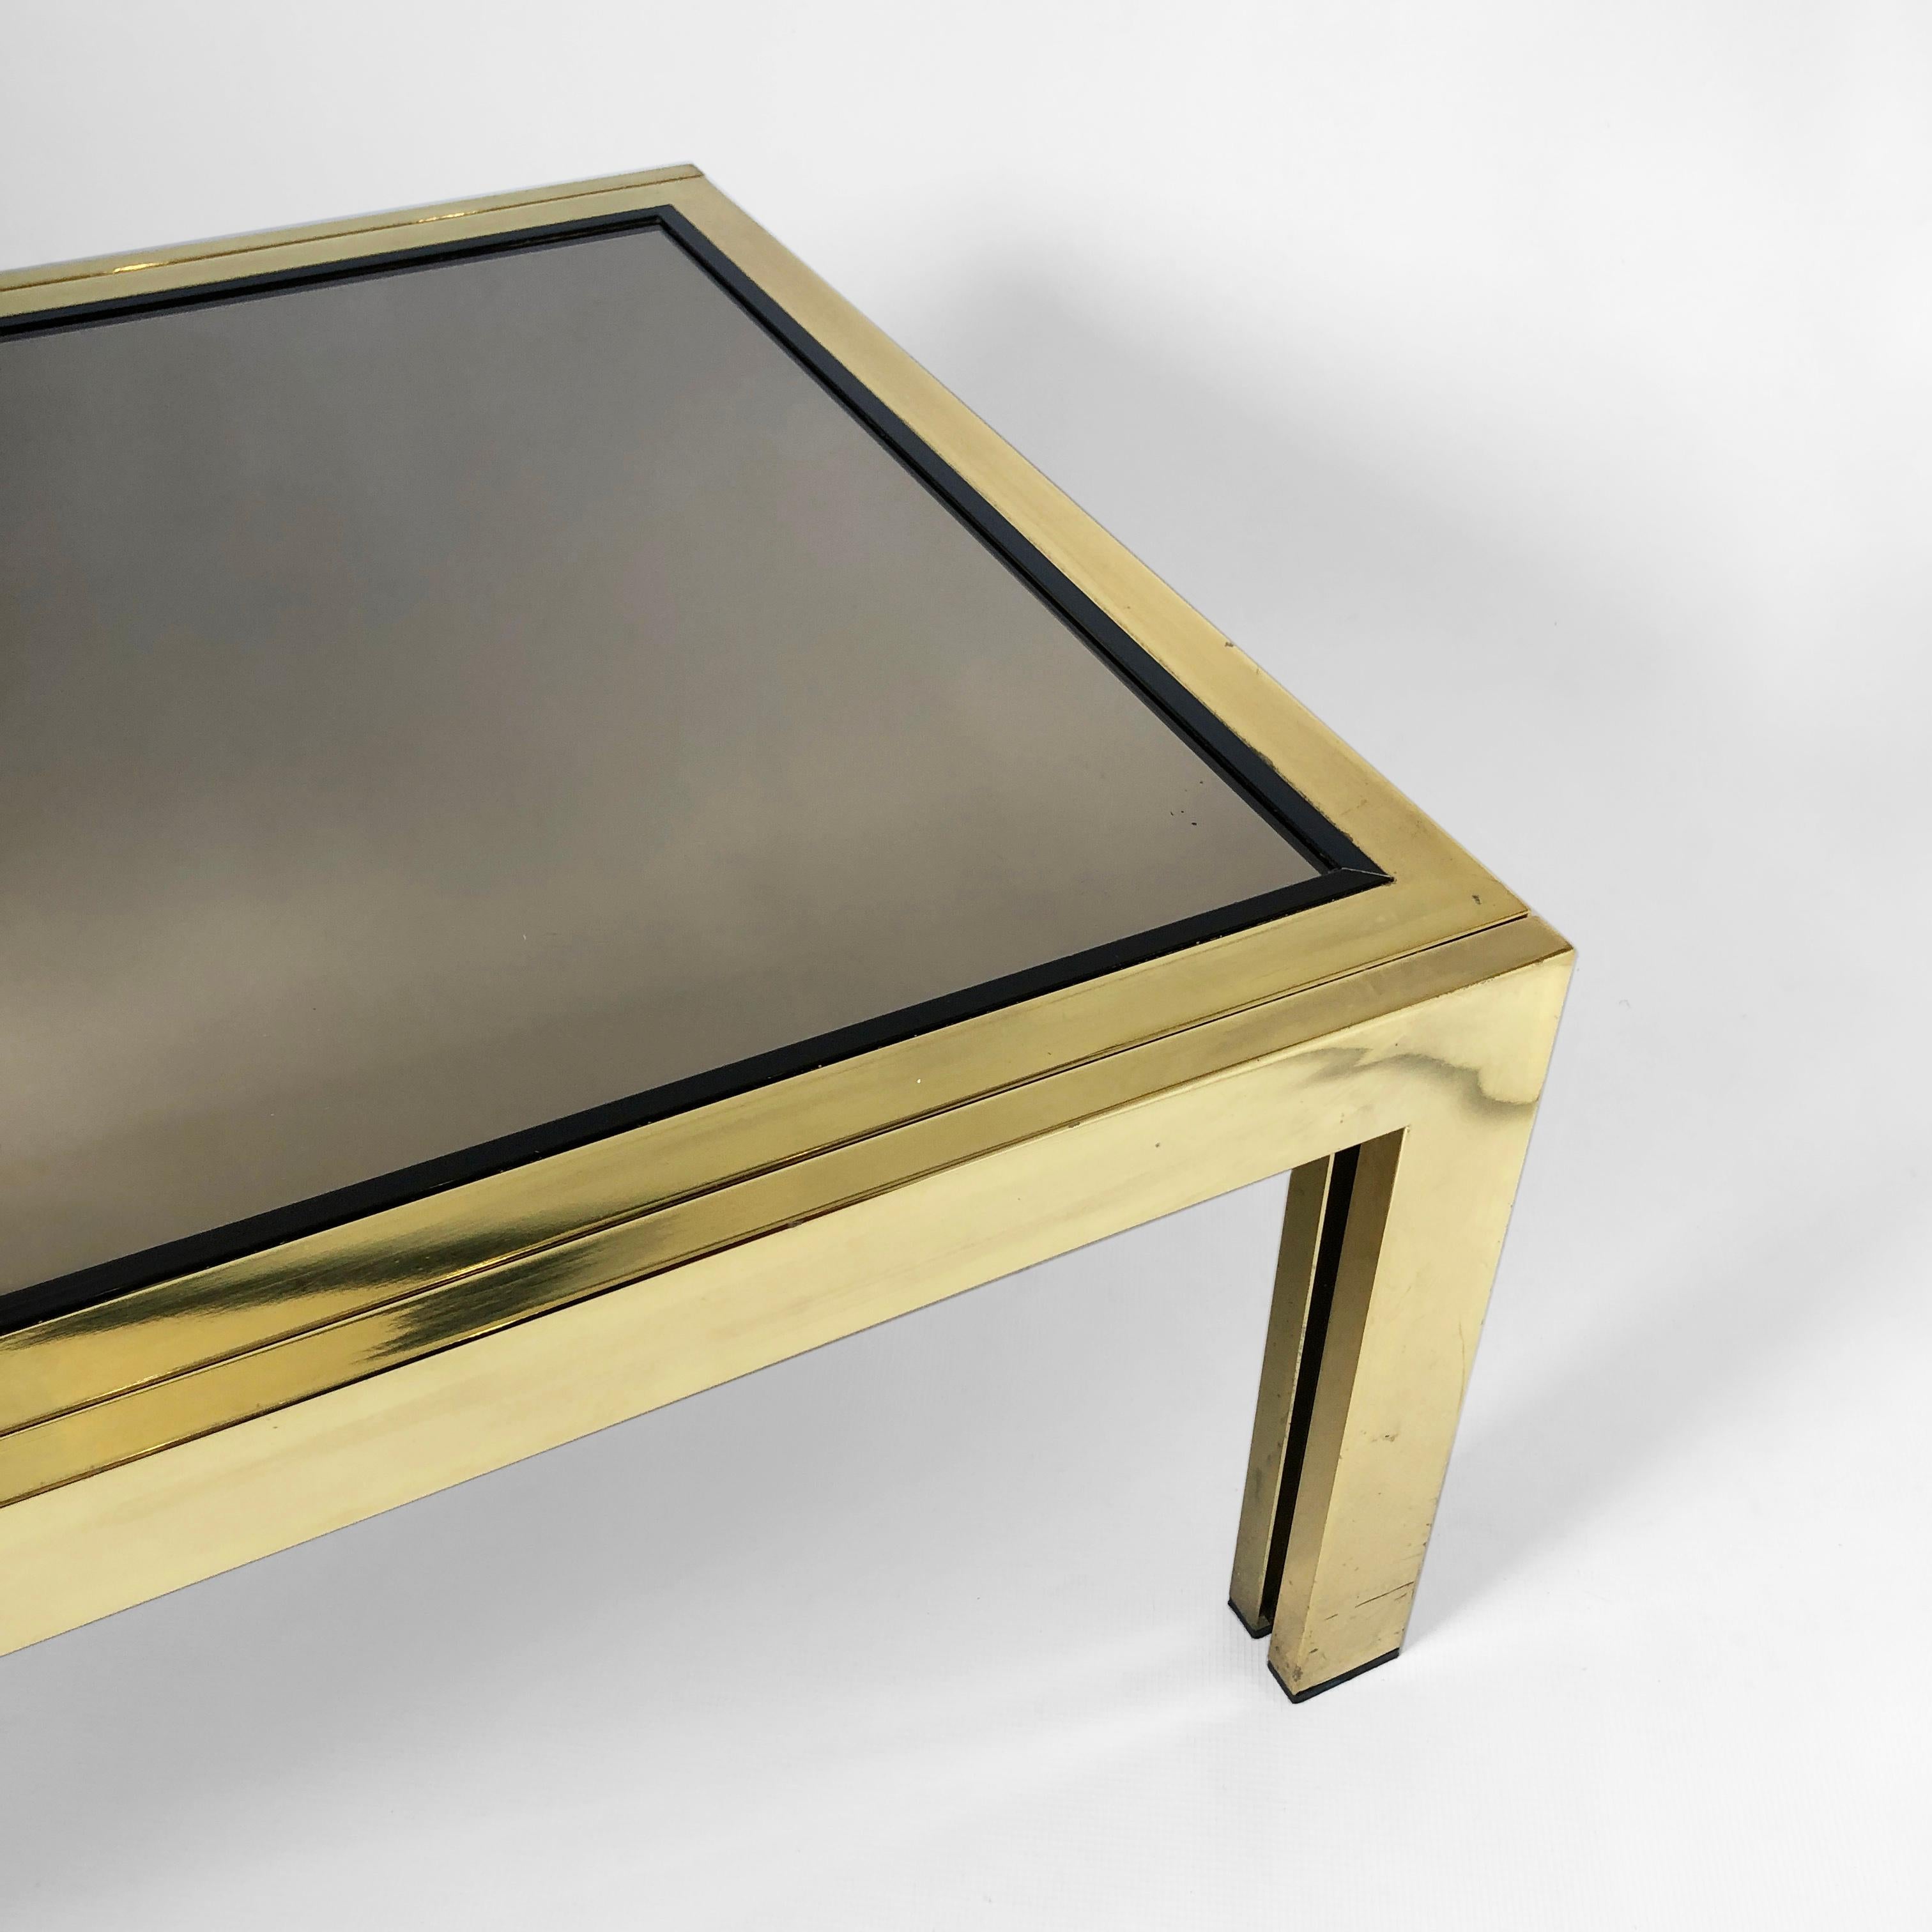 Brass Smoked Mirror Rectangular Coffee Table 1970s Hollywood Regency Renato Zevi For Sale 2